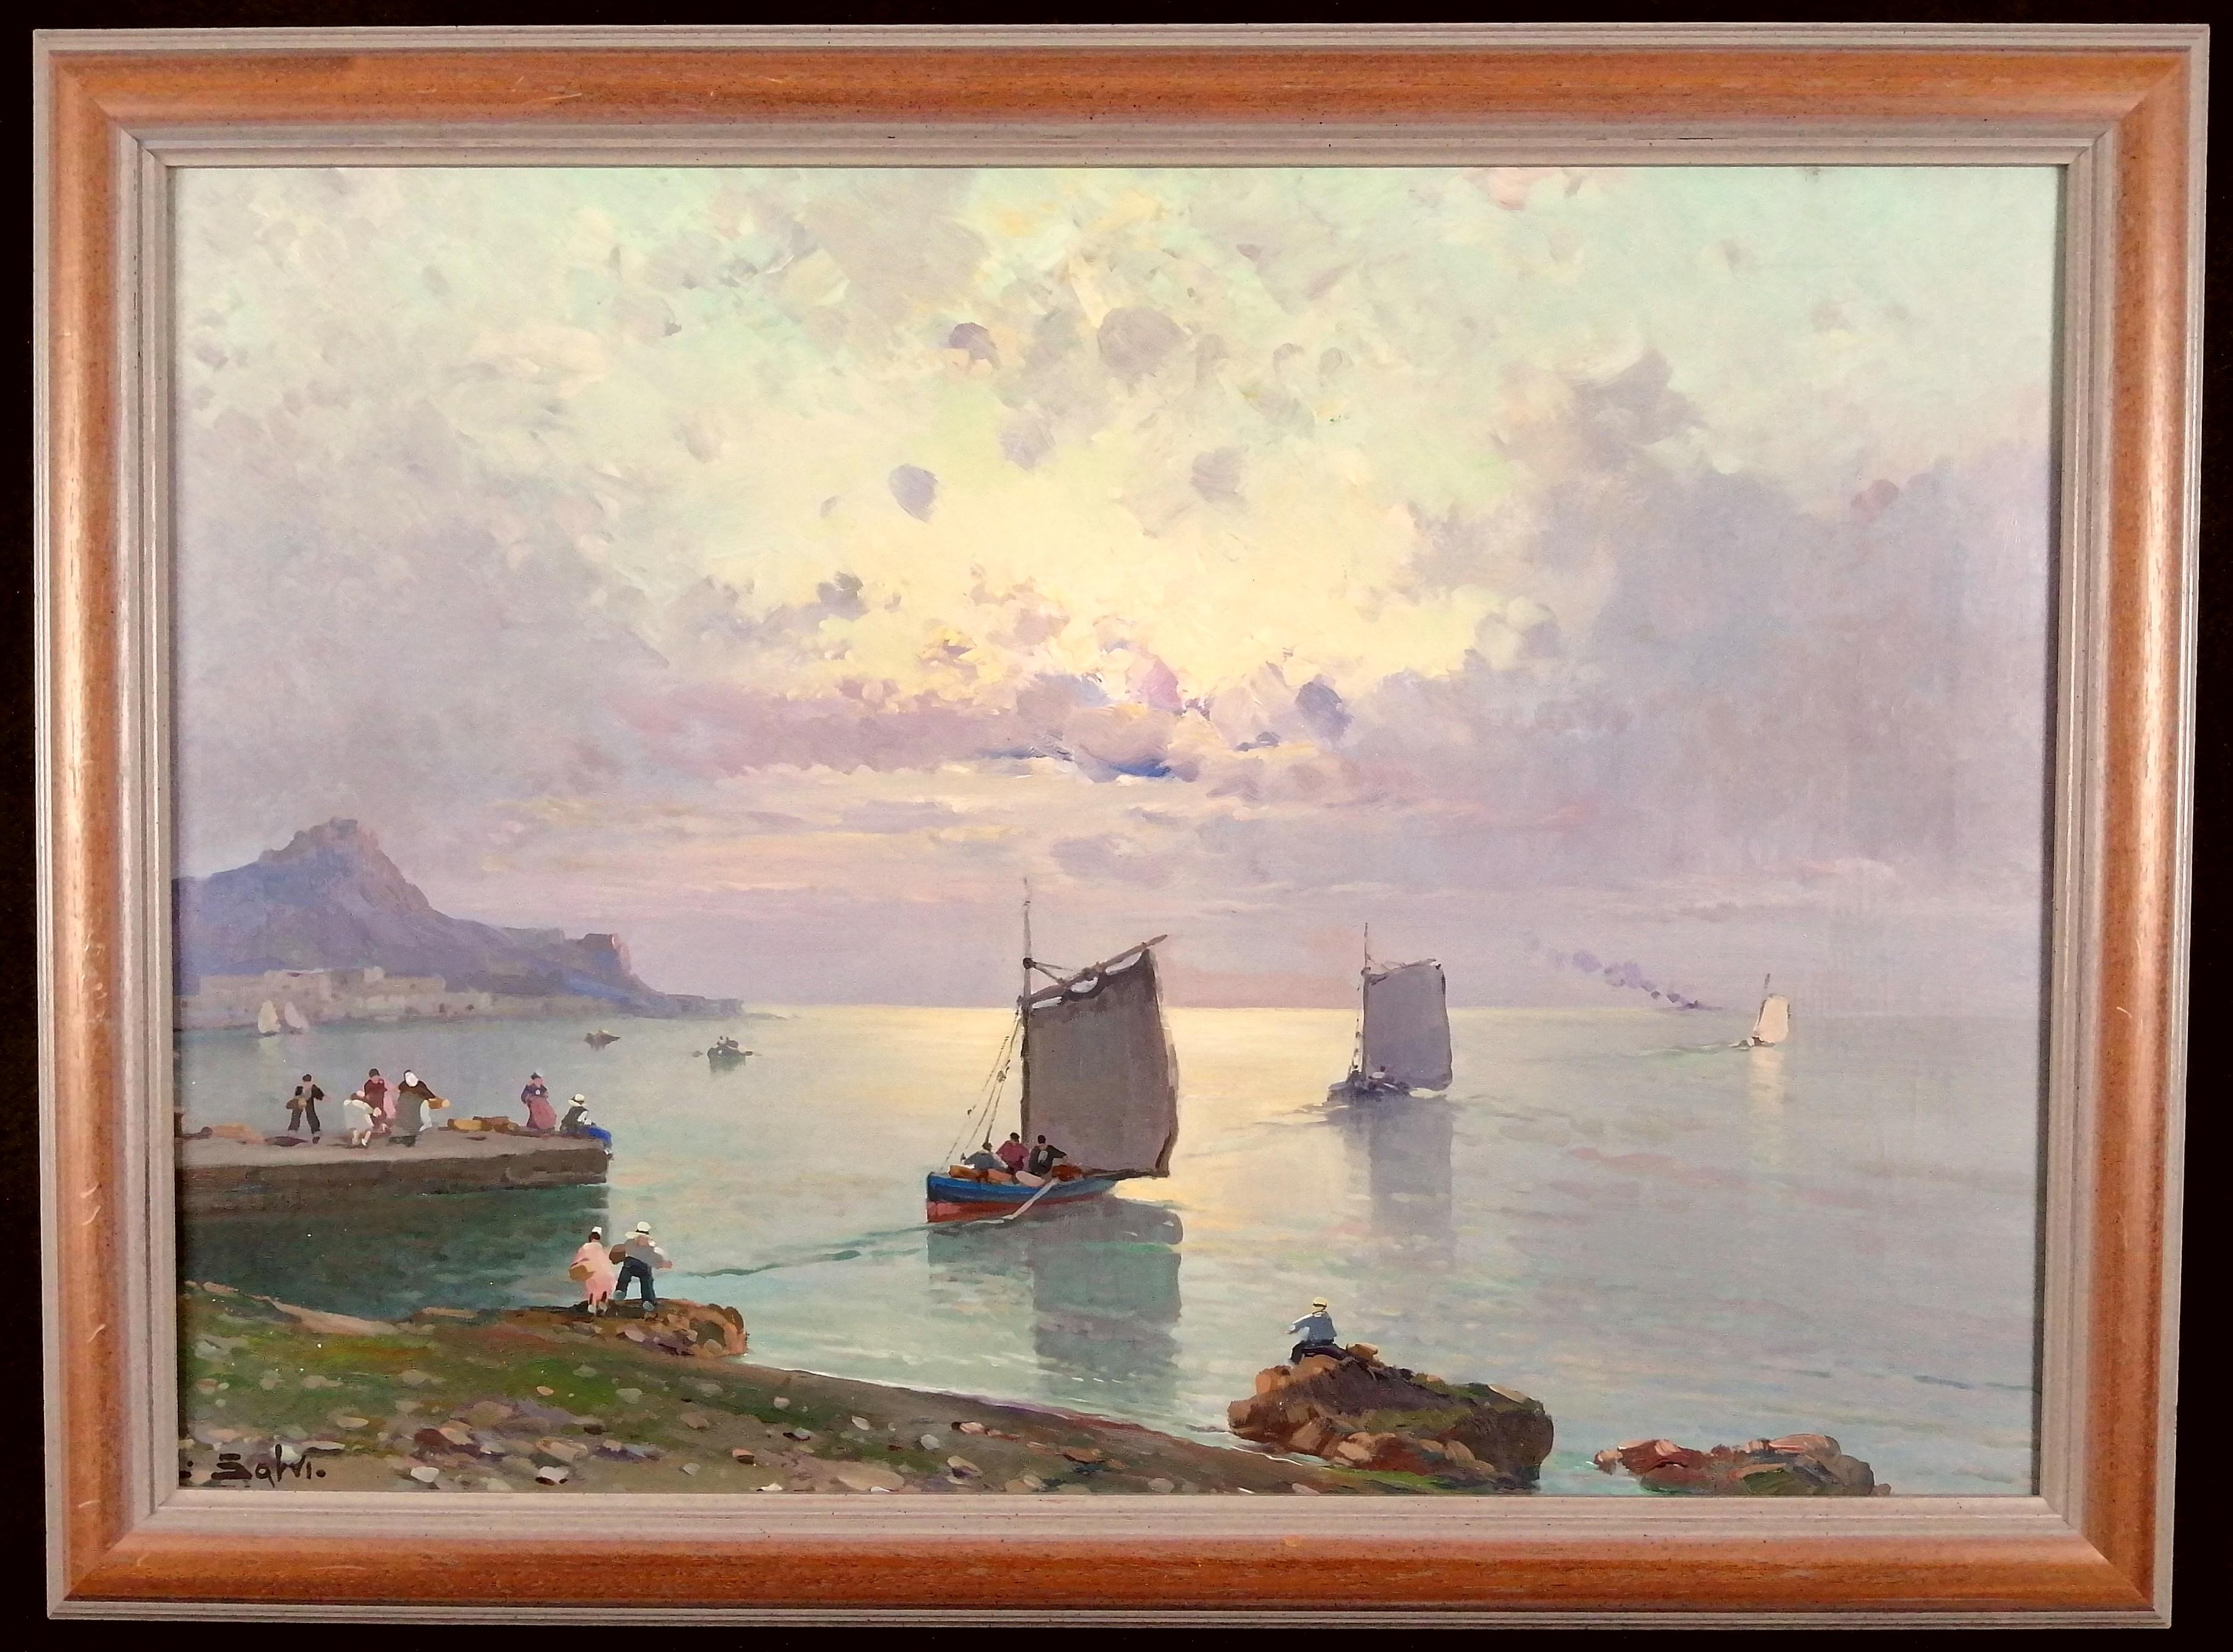 Luigi Salvi Landscape Painting - Sunset on the Coast - Early 20th Century Italian Seascape Oil on Canvas Painting